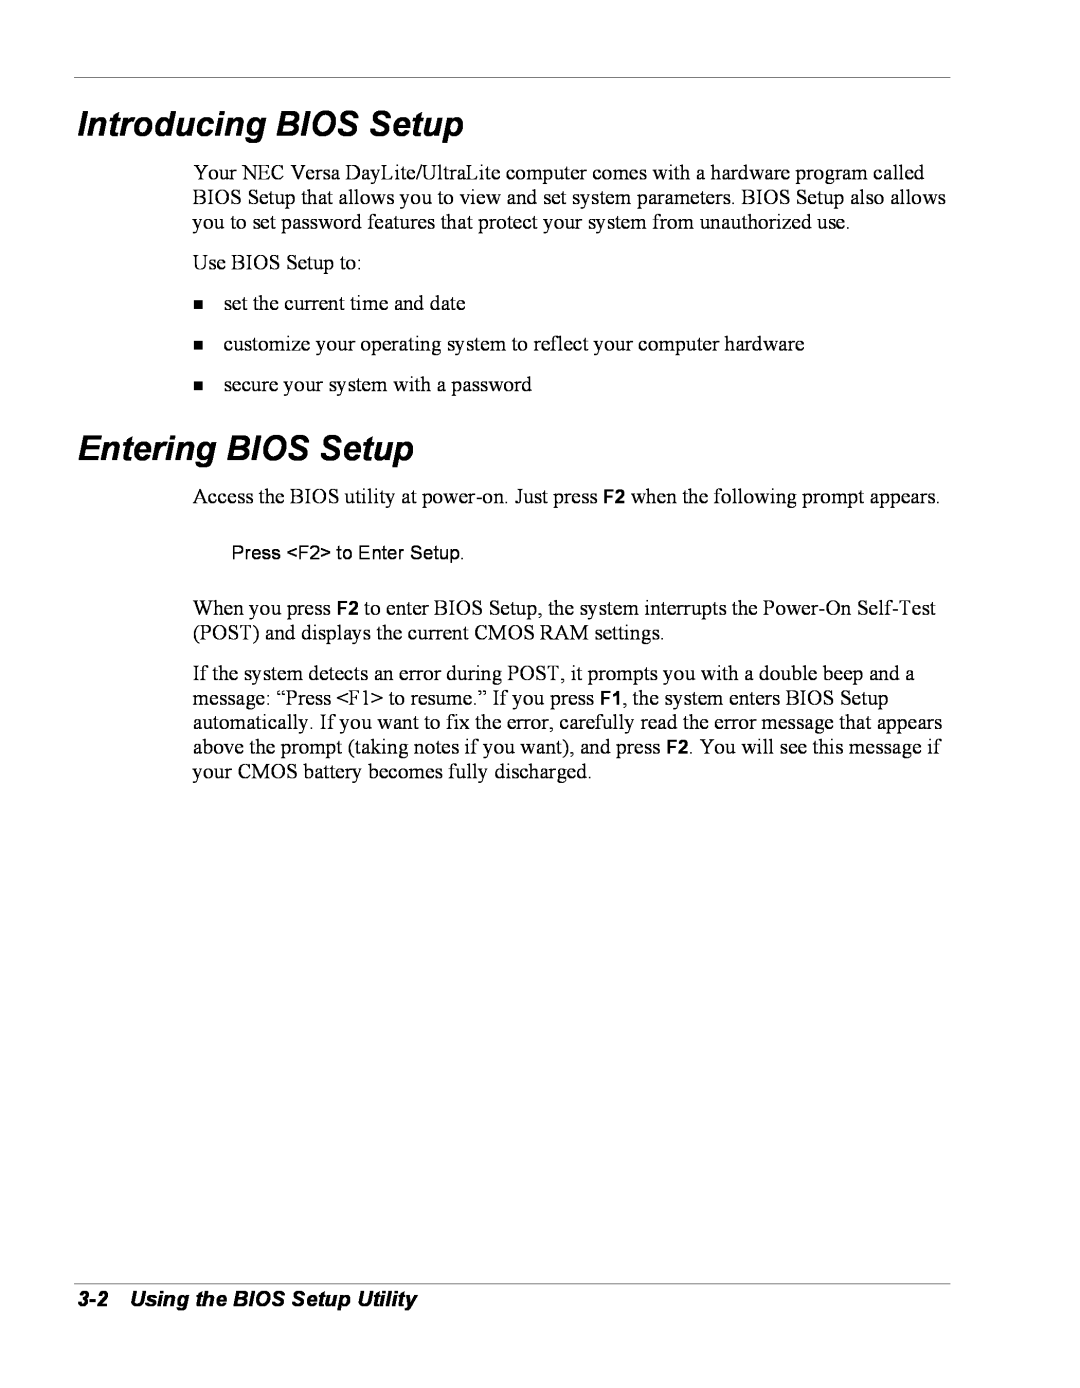 NEC Versa Series manual Introducing BIOS Setup, Entering BIOS Setup, Using the BIOS Setup Utility 